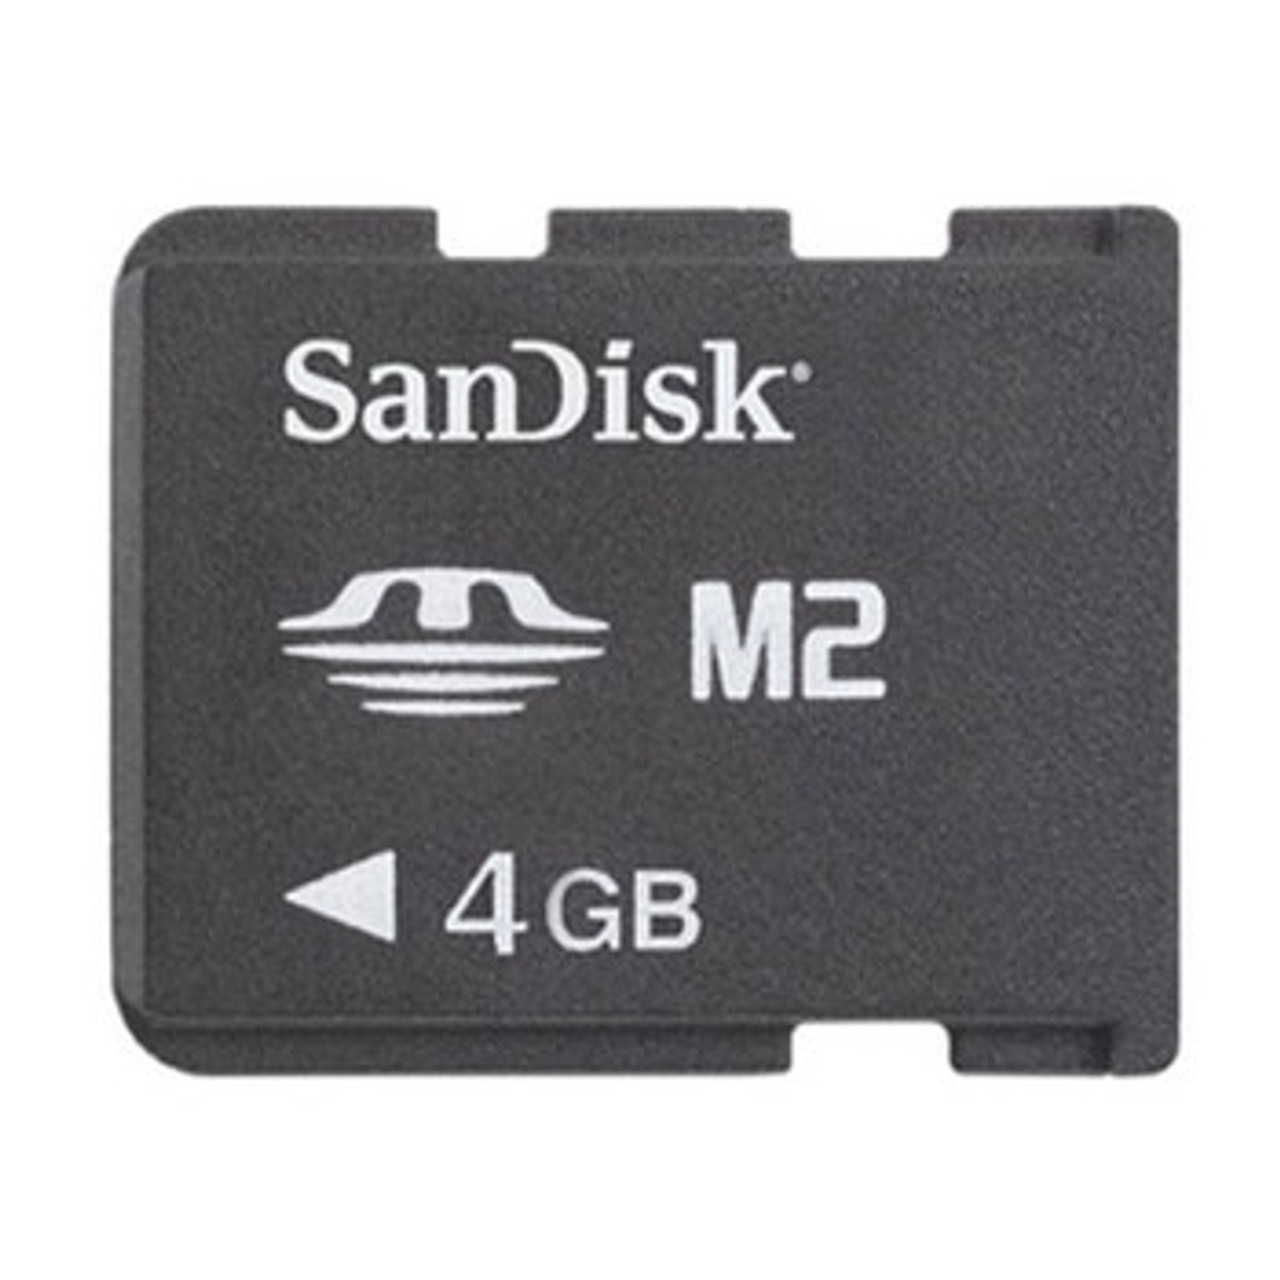 SDMSM2G-004G-E11 | Sandisk | Micro M2 4Gb Memory Card